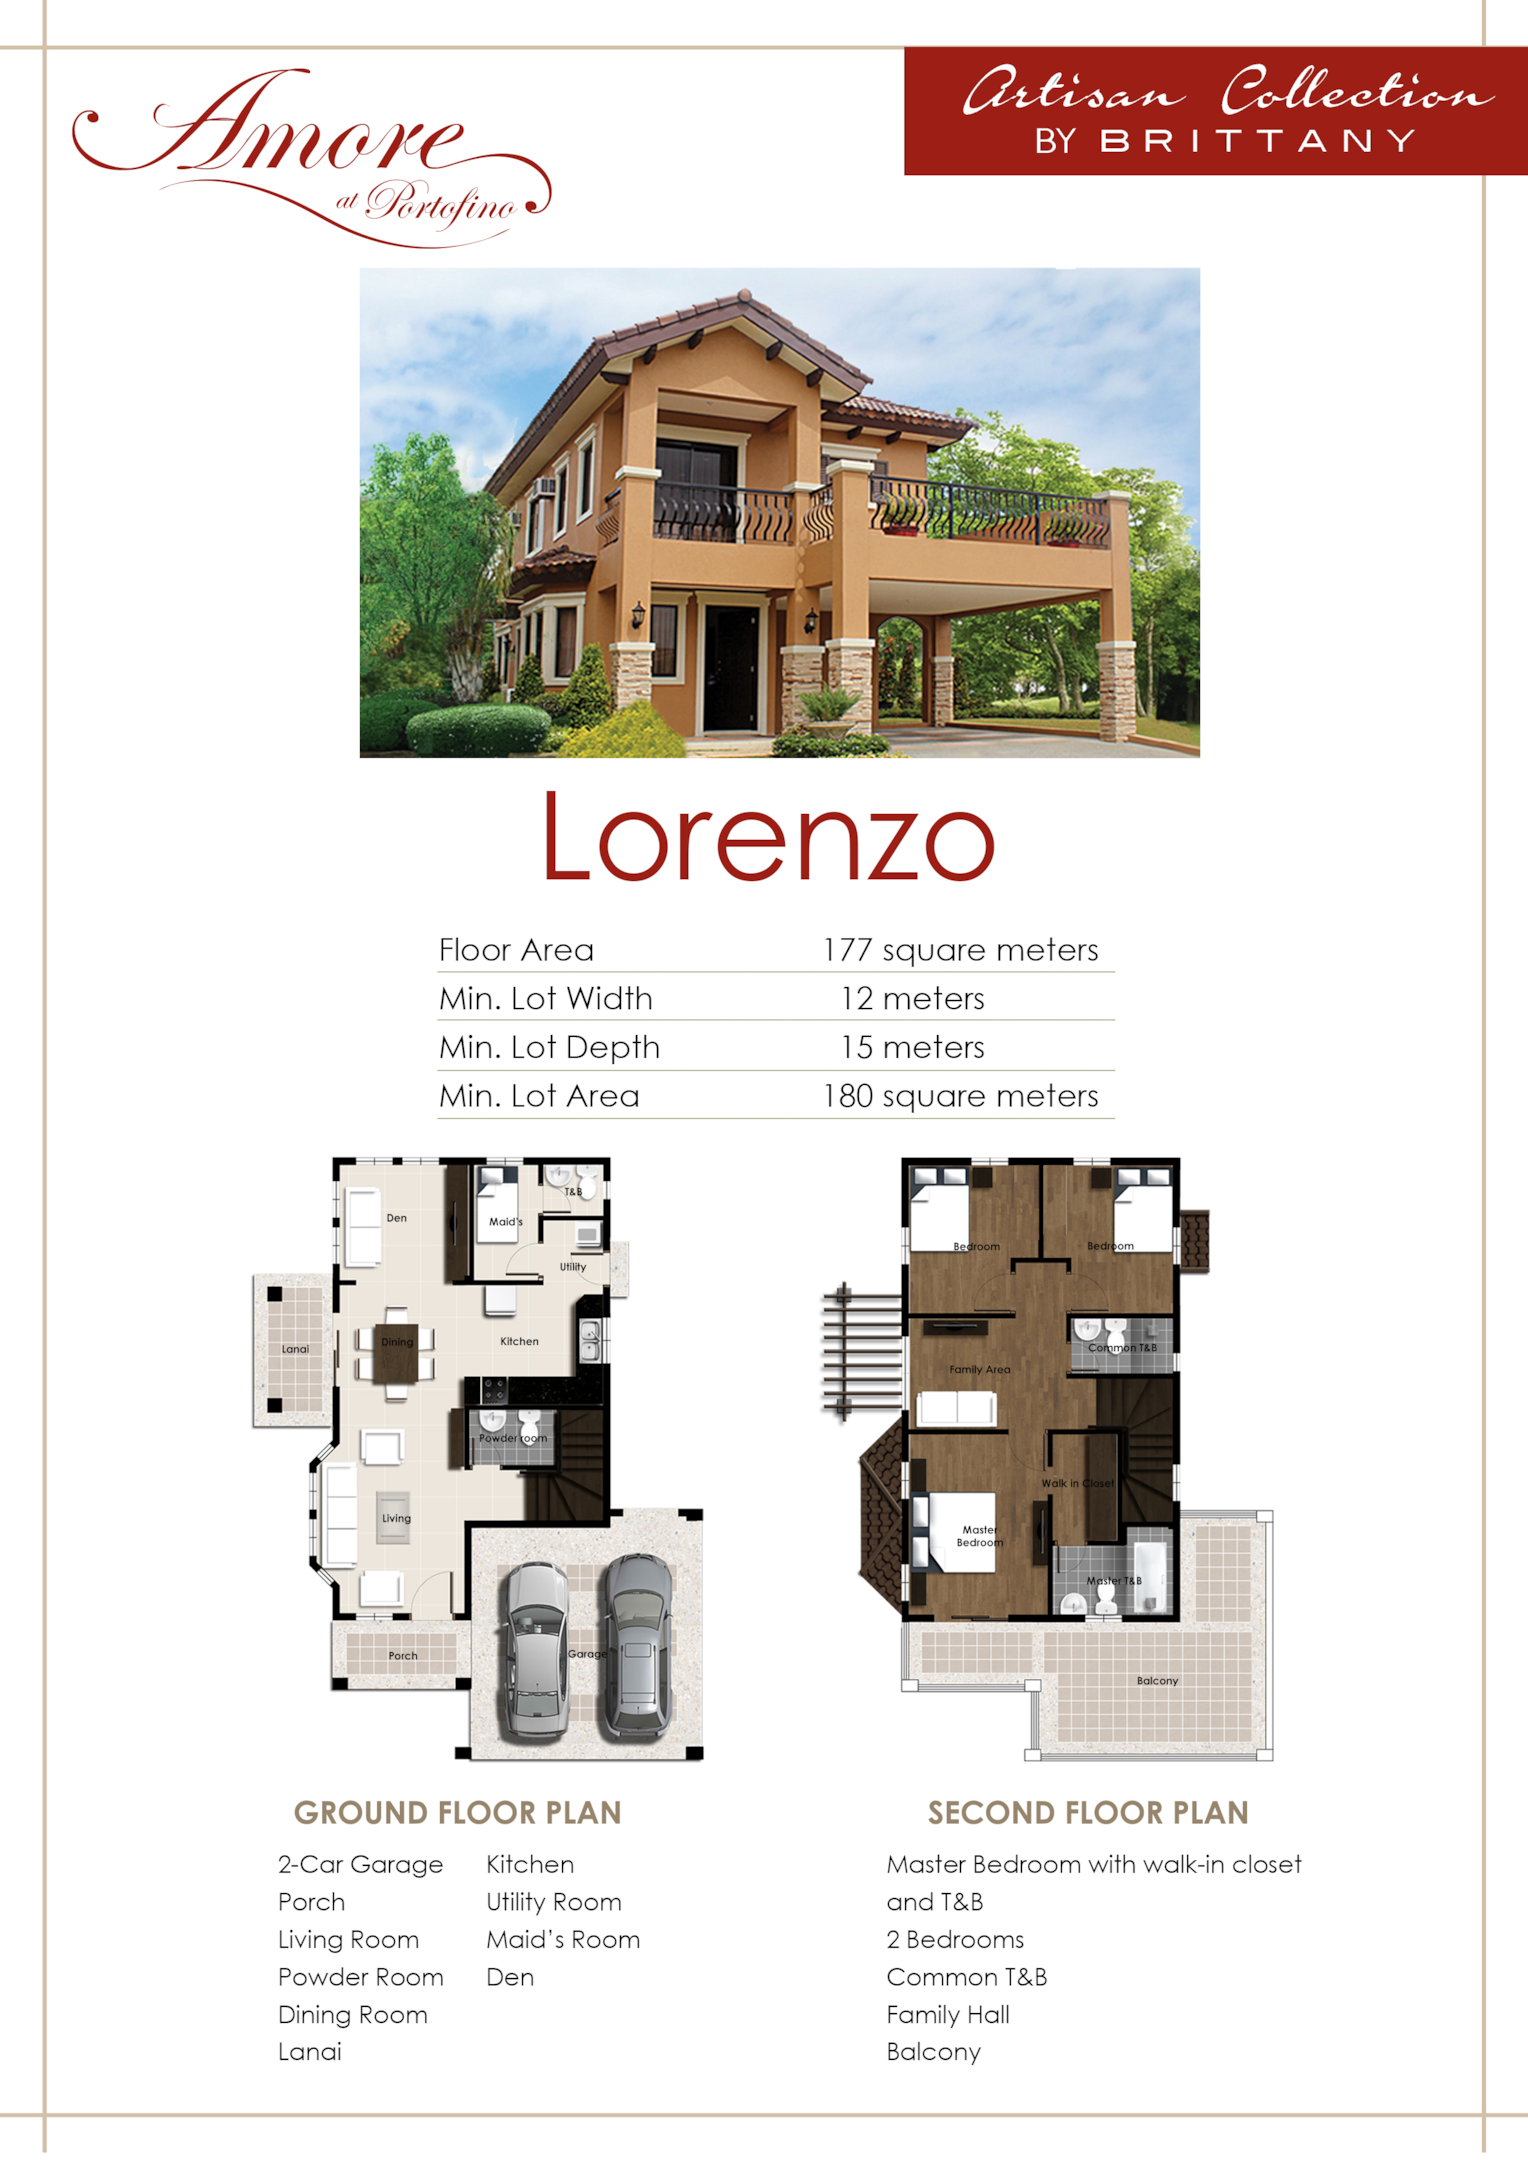 Floor plan of Lorenzo luxury home within the Italian-inspired community of Portofino Alabang